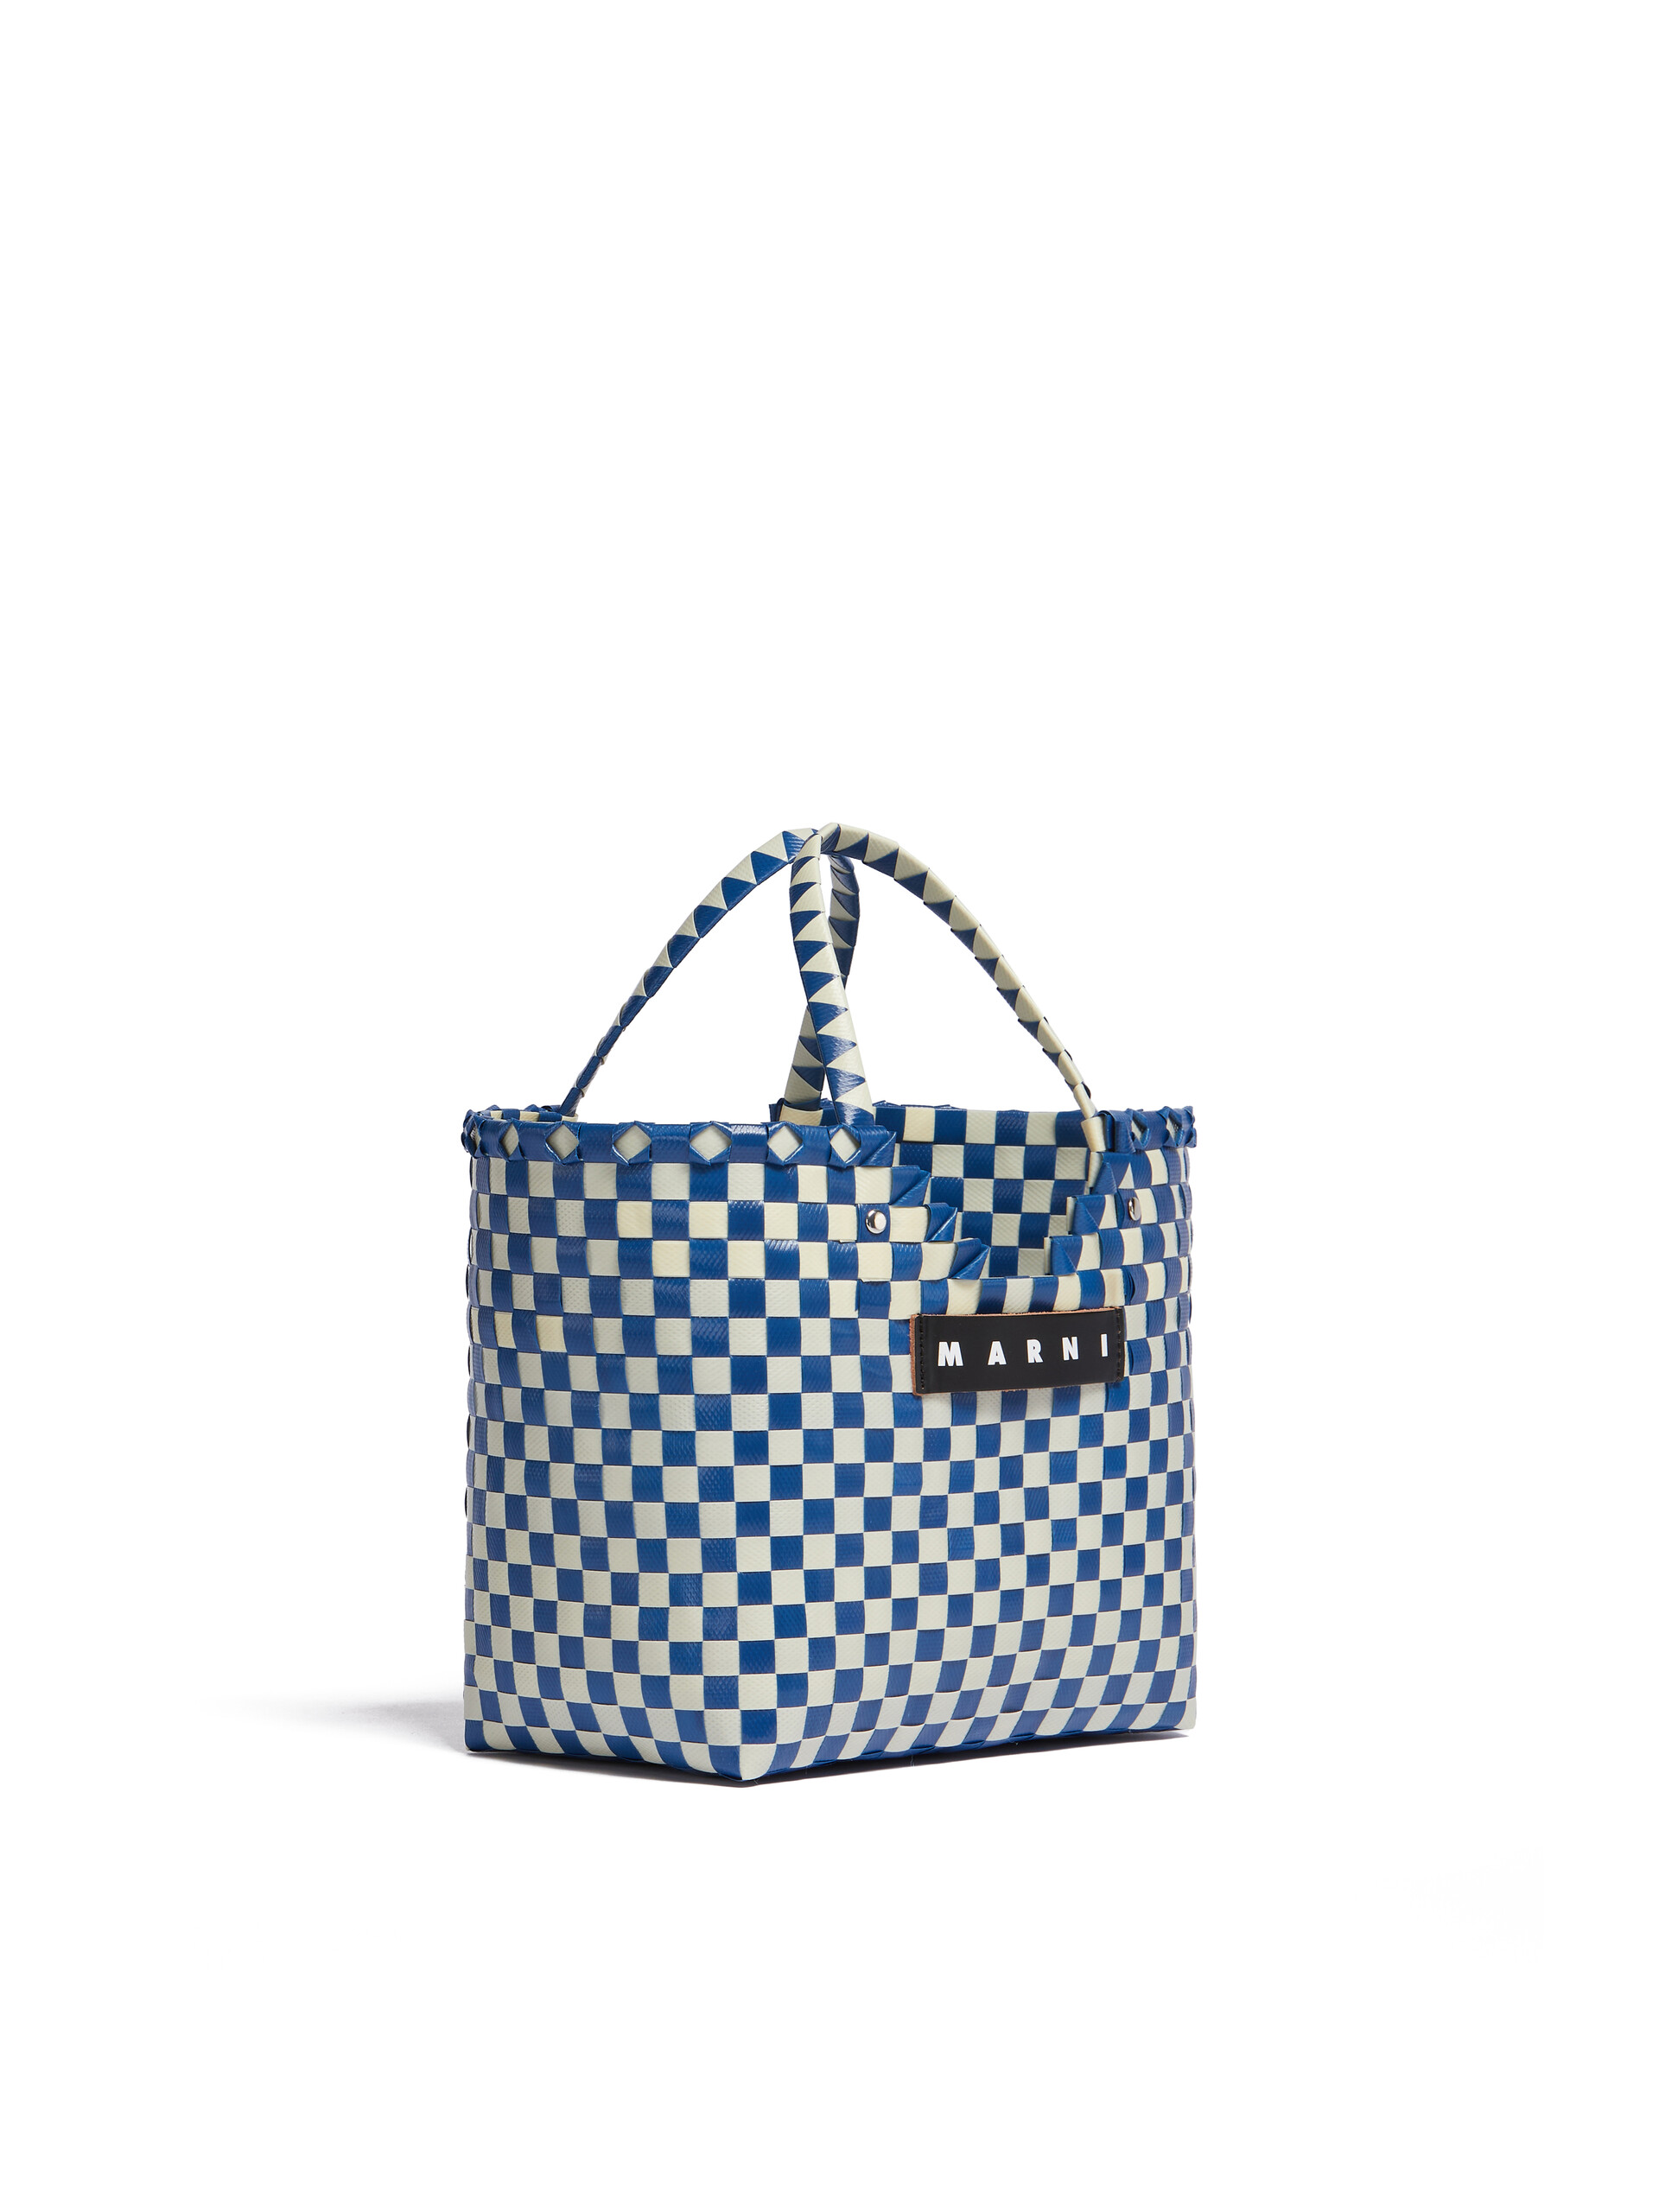 Blue and white MARNI MARKET LOVE BASKET bag - Bags - Image 2